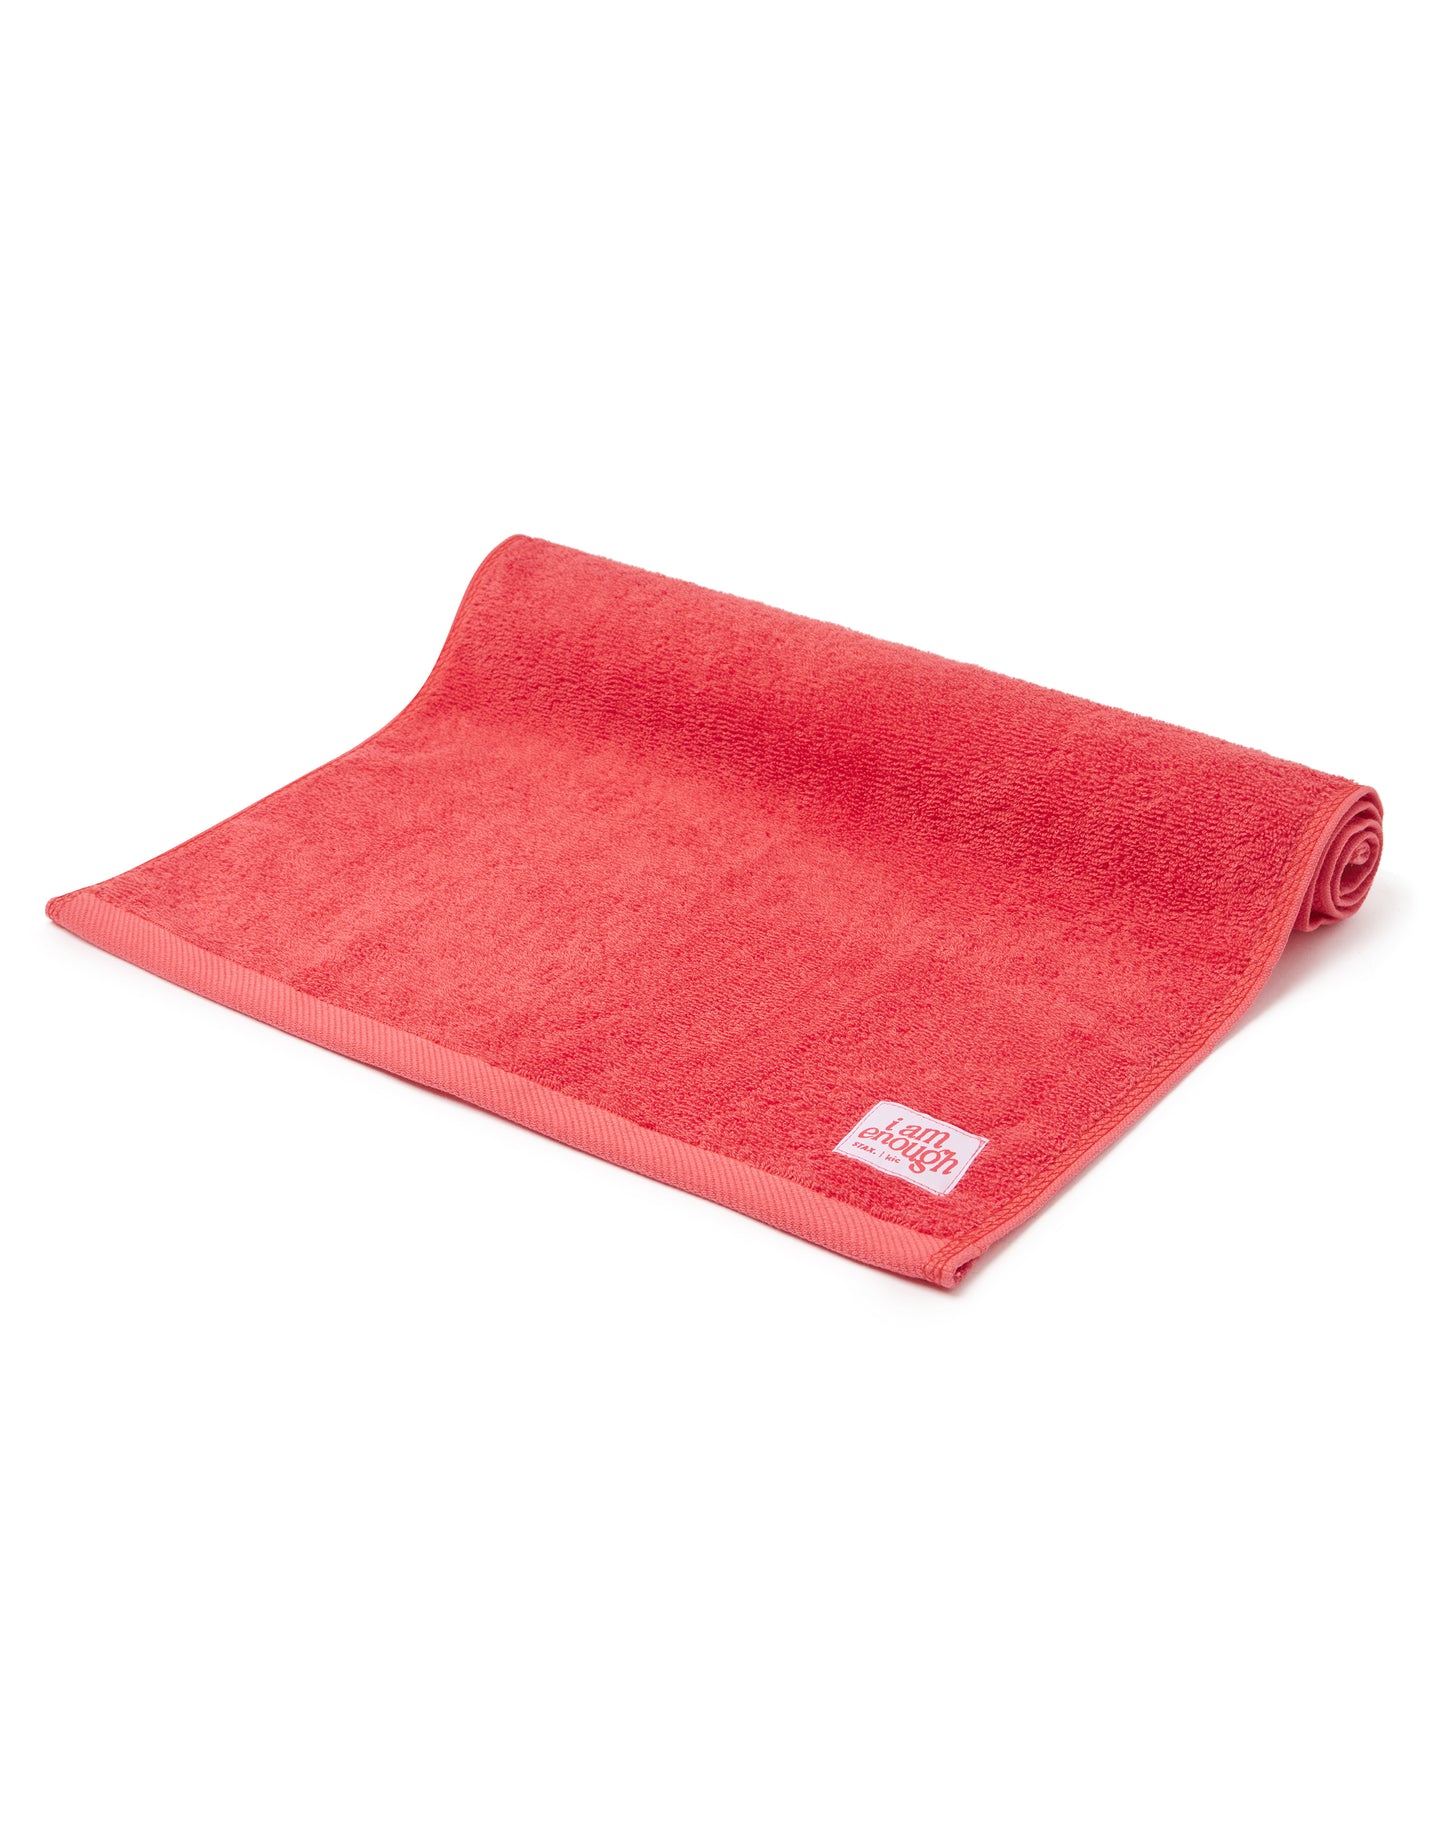 Kic Gym Towel - Dark Pink